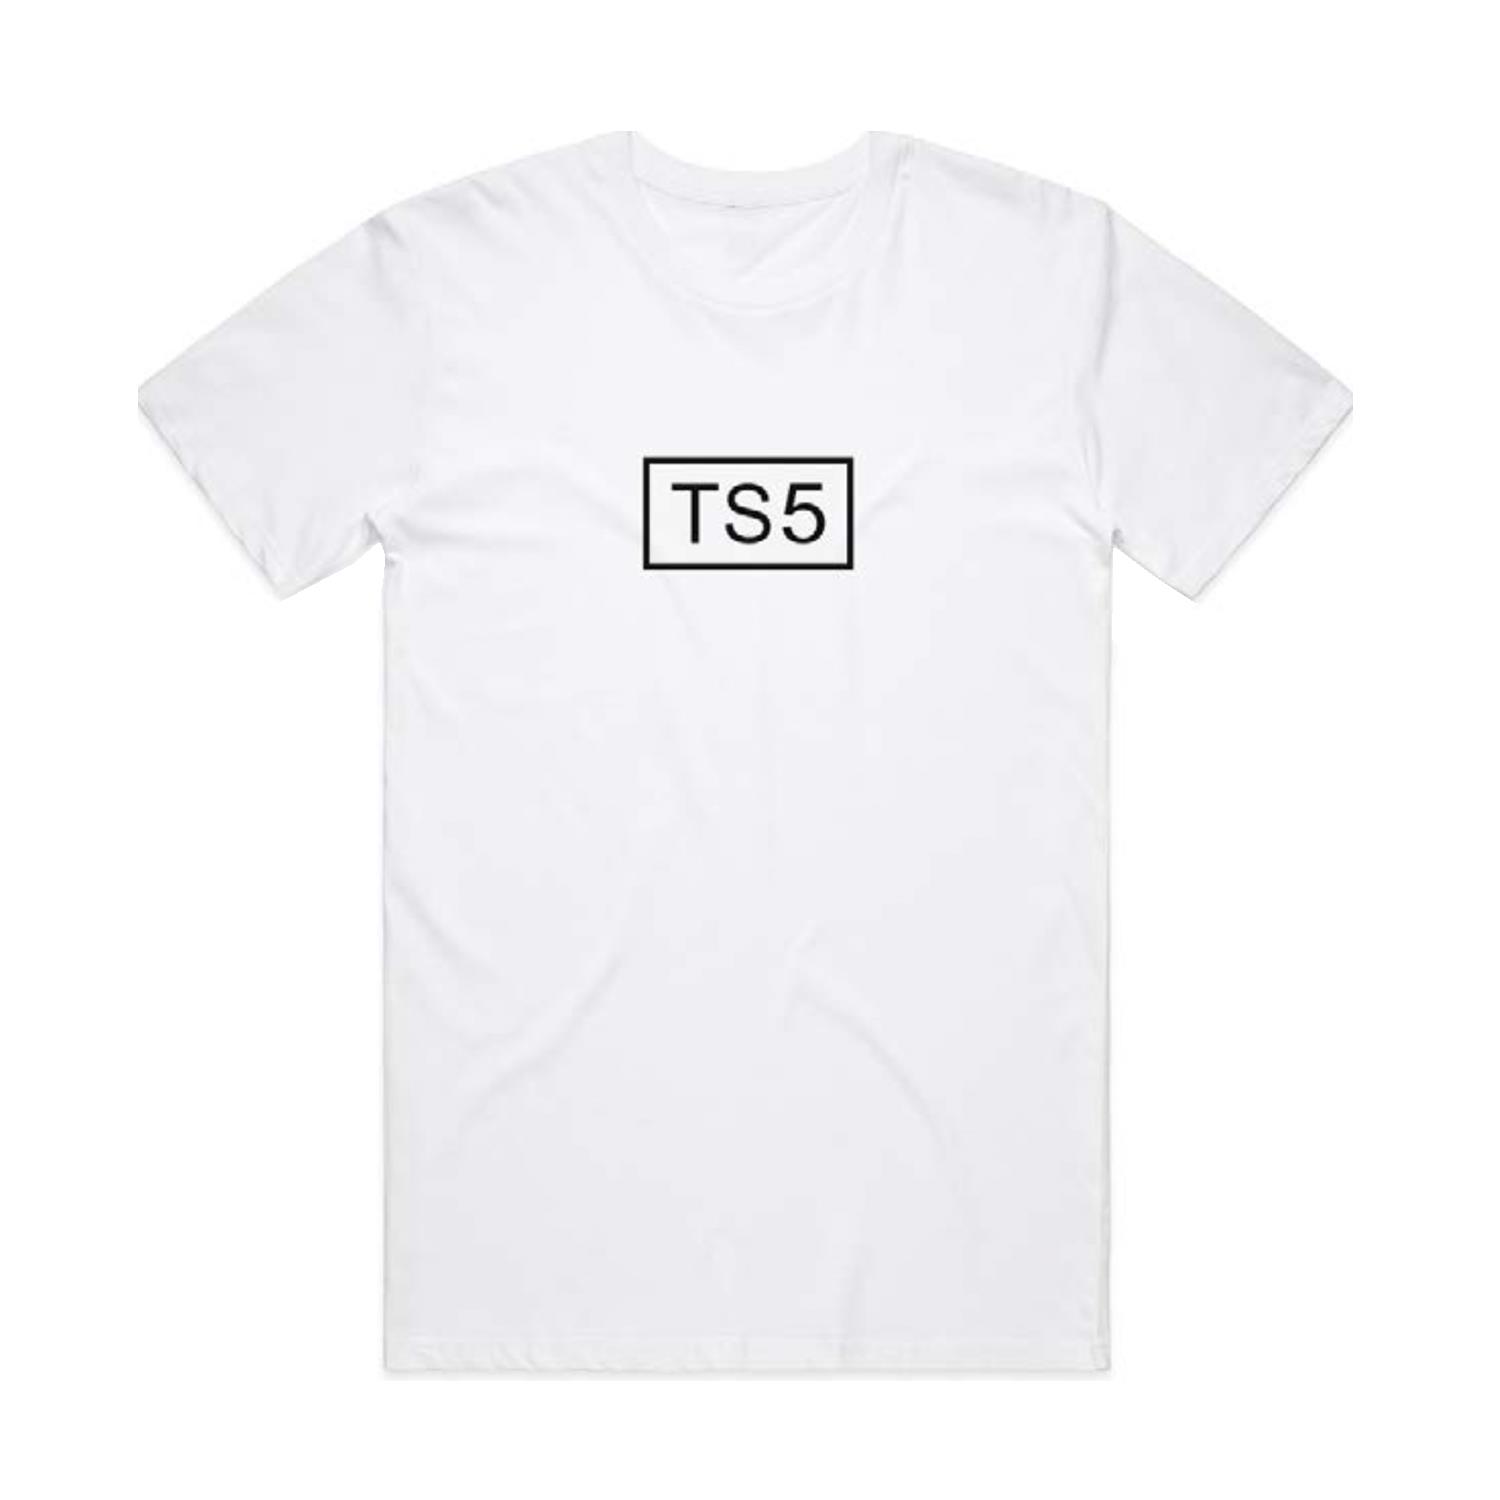 Craig David - TS5 White T-Shirt